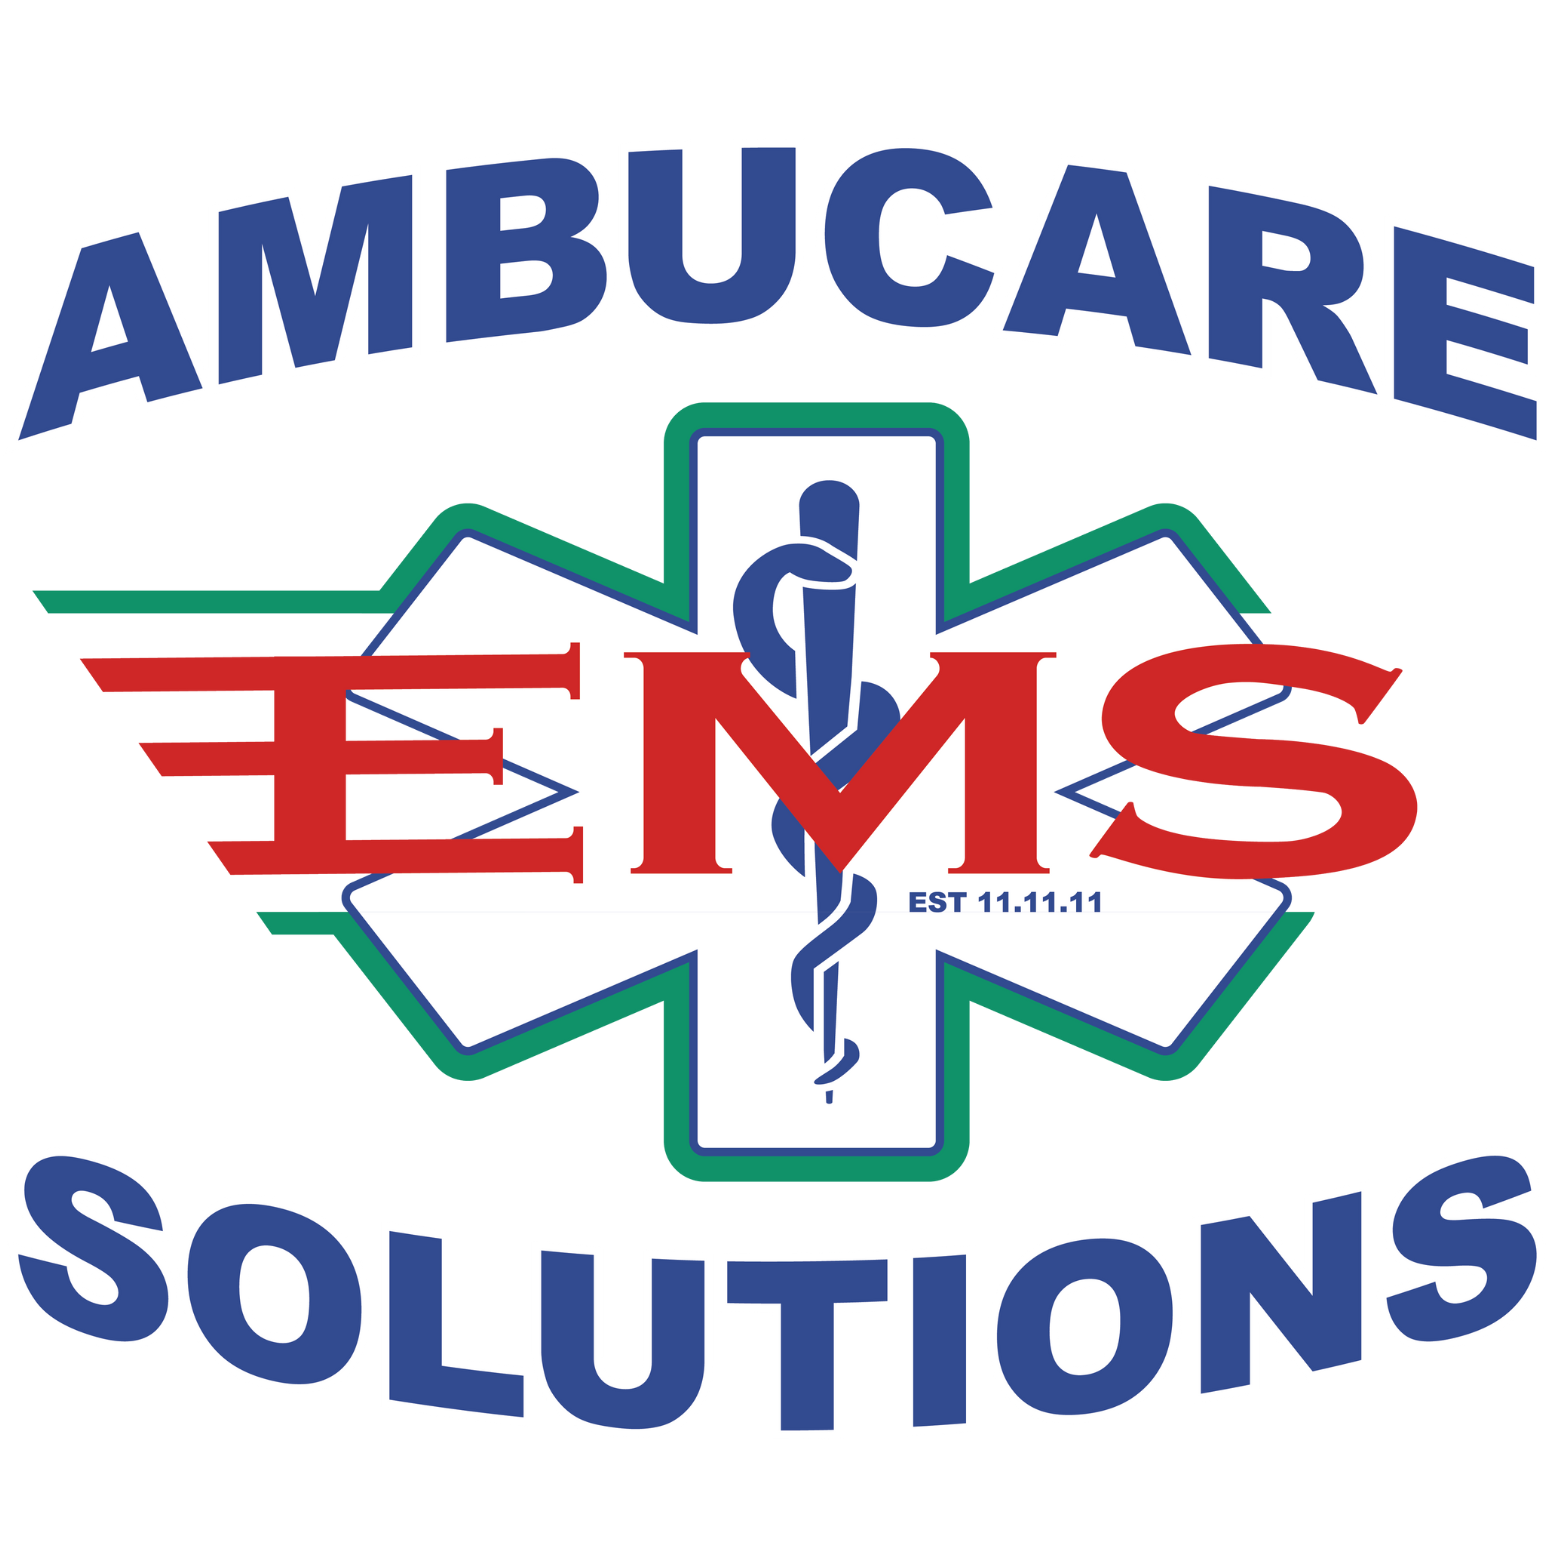 Winner Image - Ambucare Ems Solutions